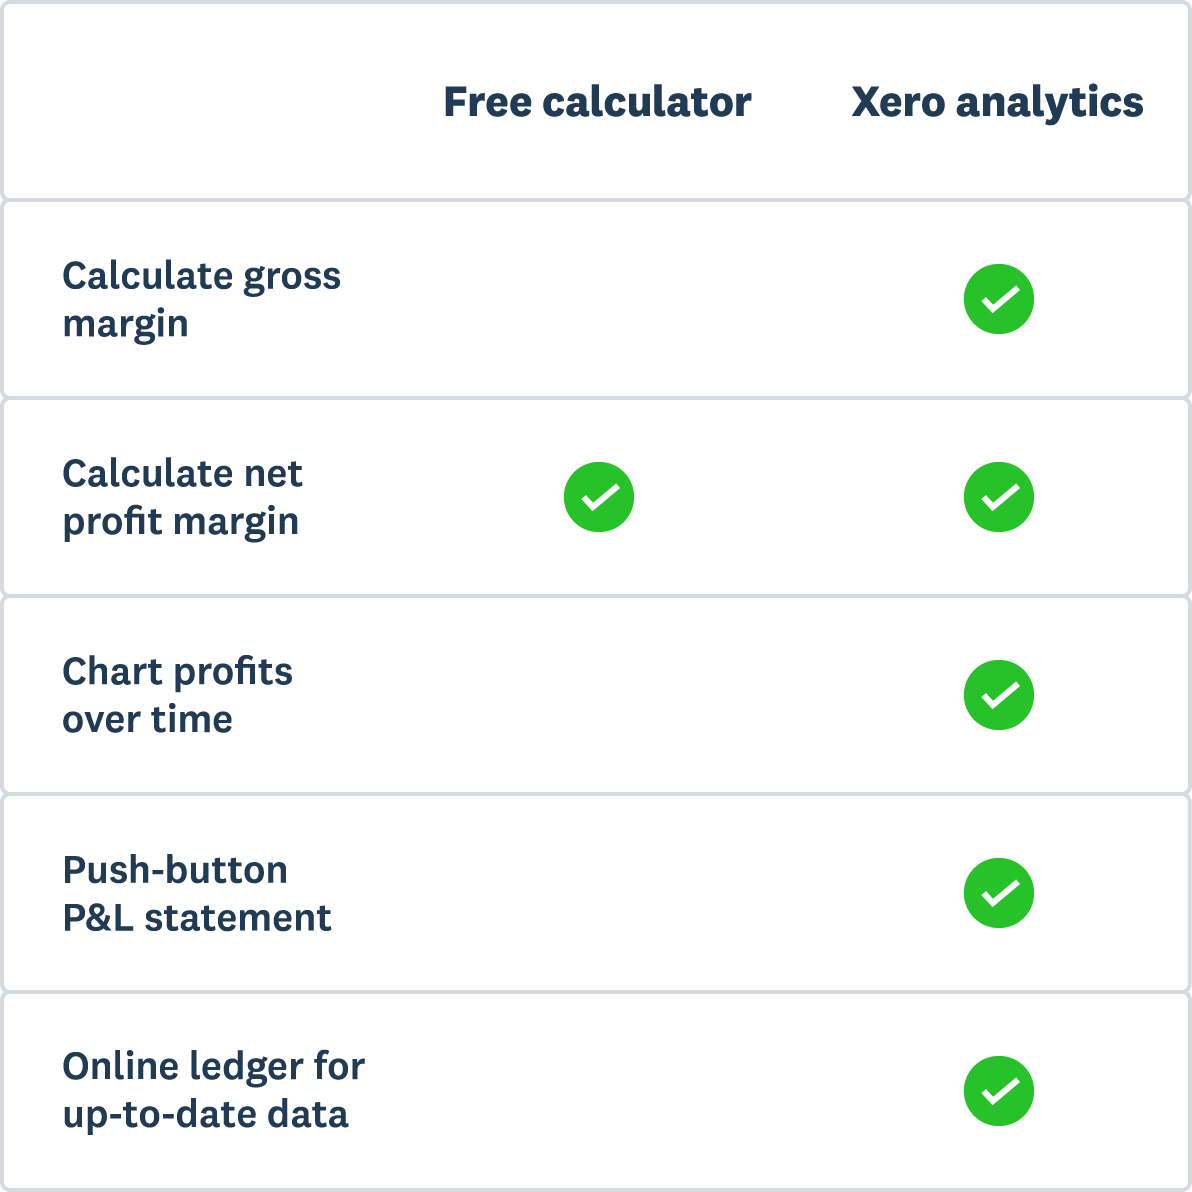 Xero analytics will calculate your gross margin, net profit margin, chart profits over time, push button P&L statement